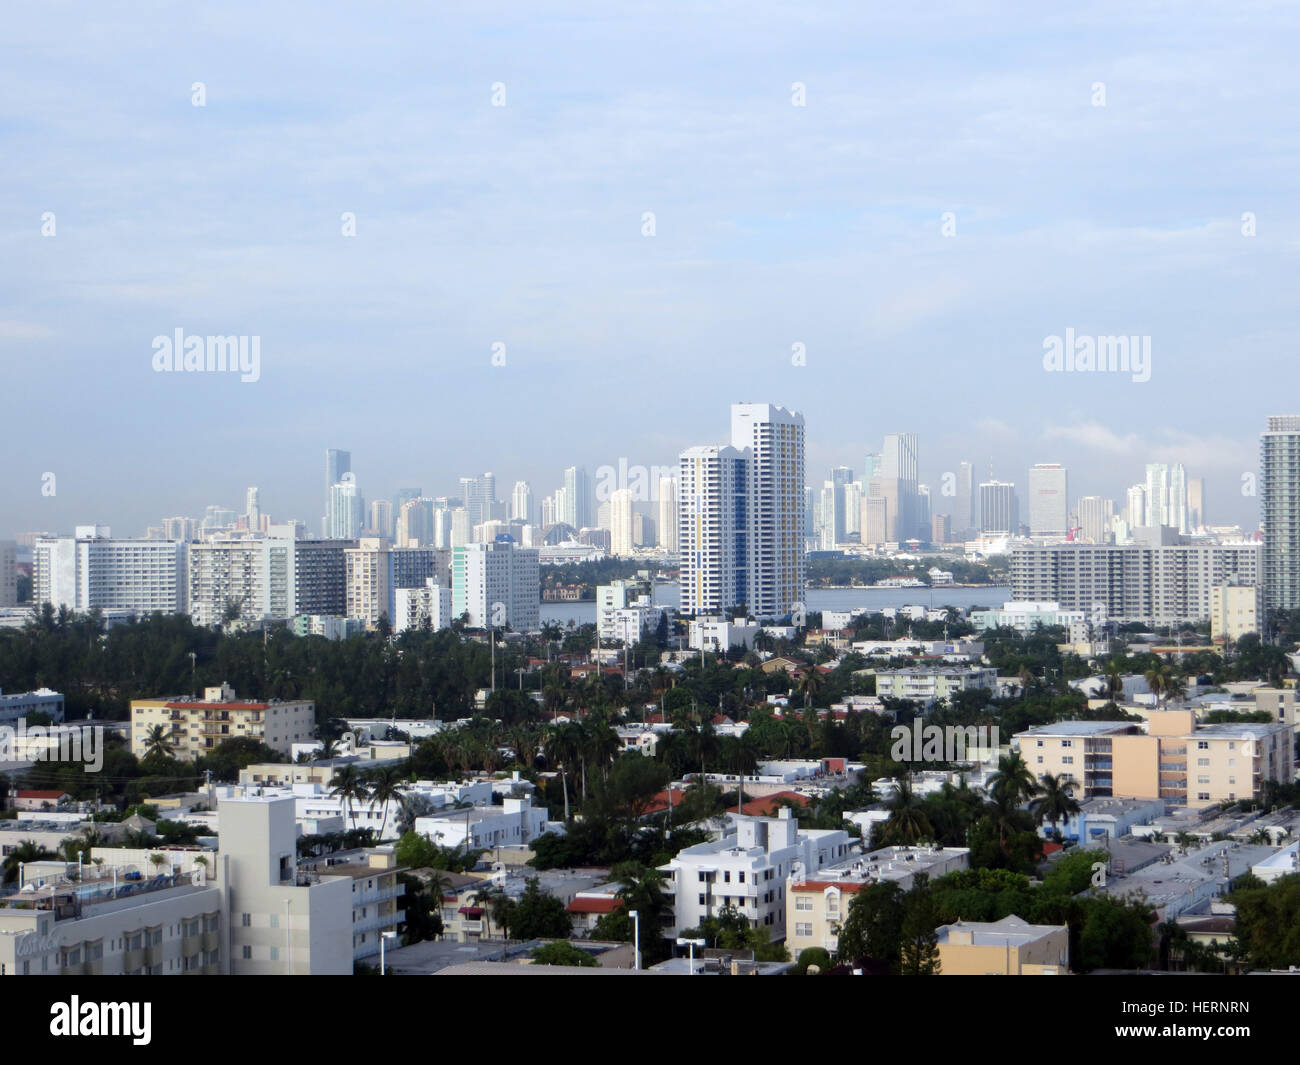 City skyline, Miami, Florida, United States Stock Photo